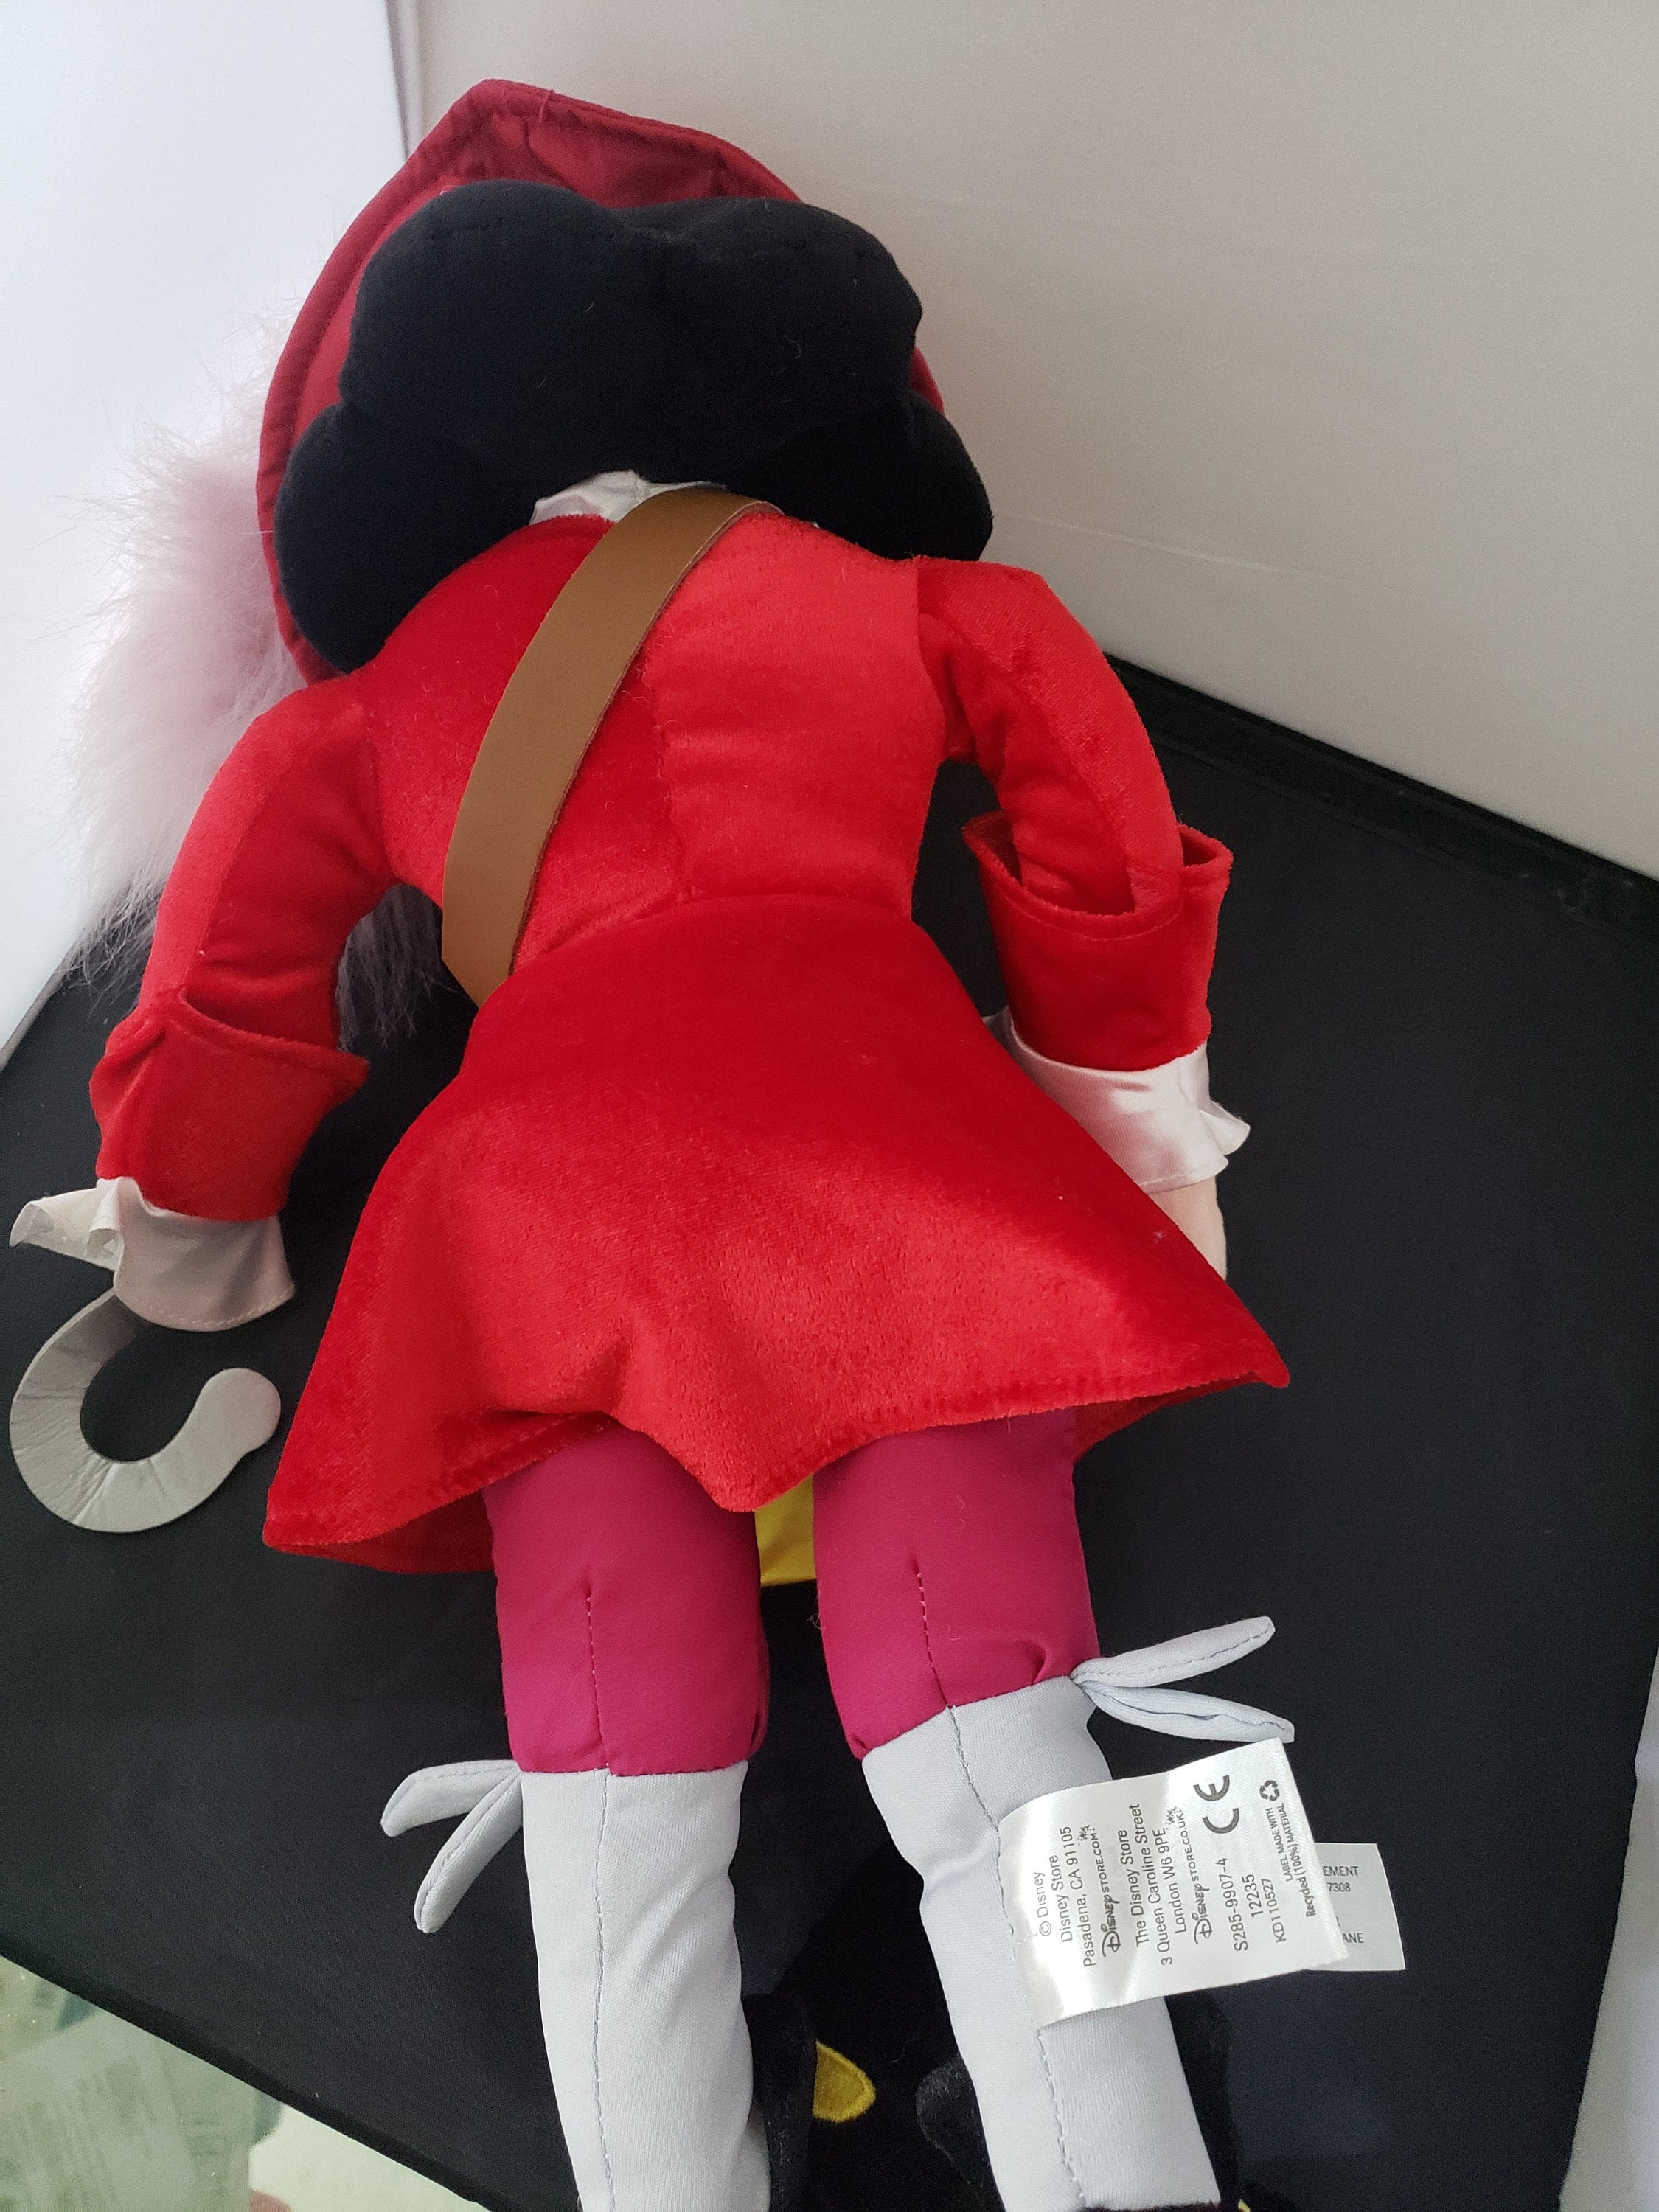 Vintage Disney store captain hook from peter pan stuffed animal doll